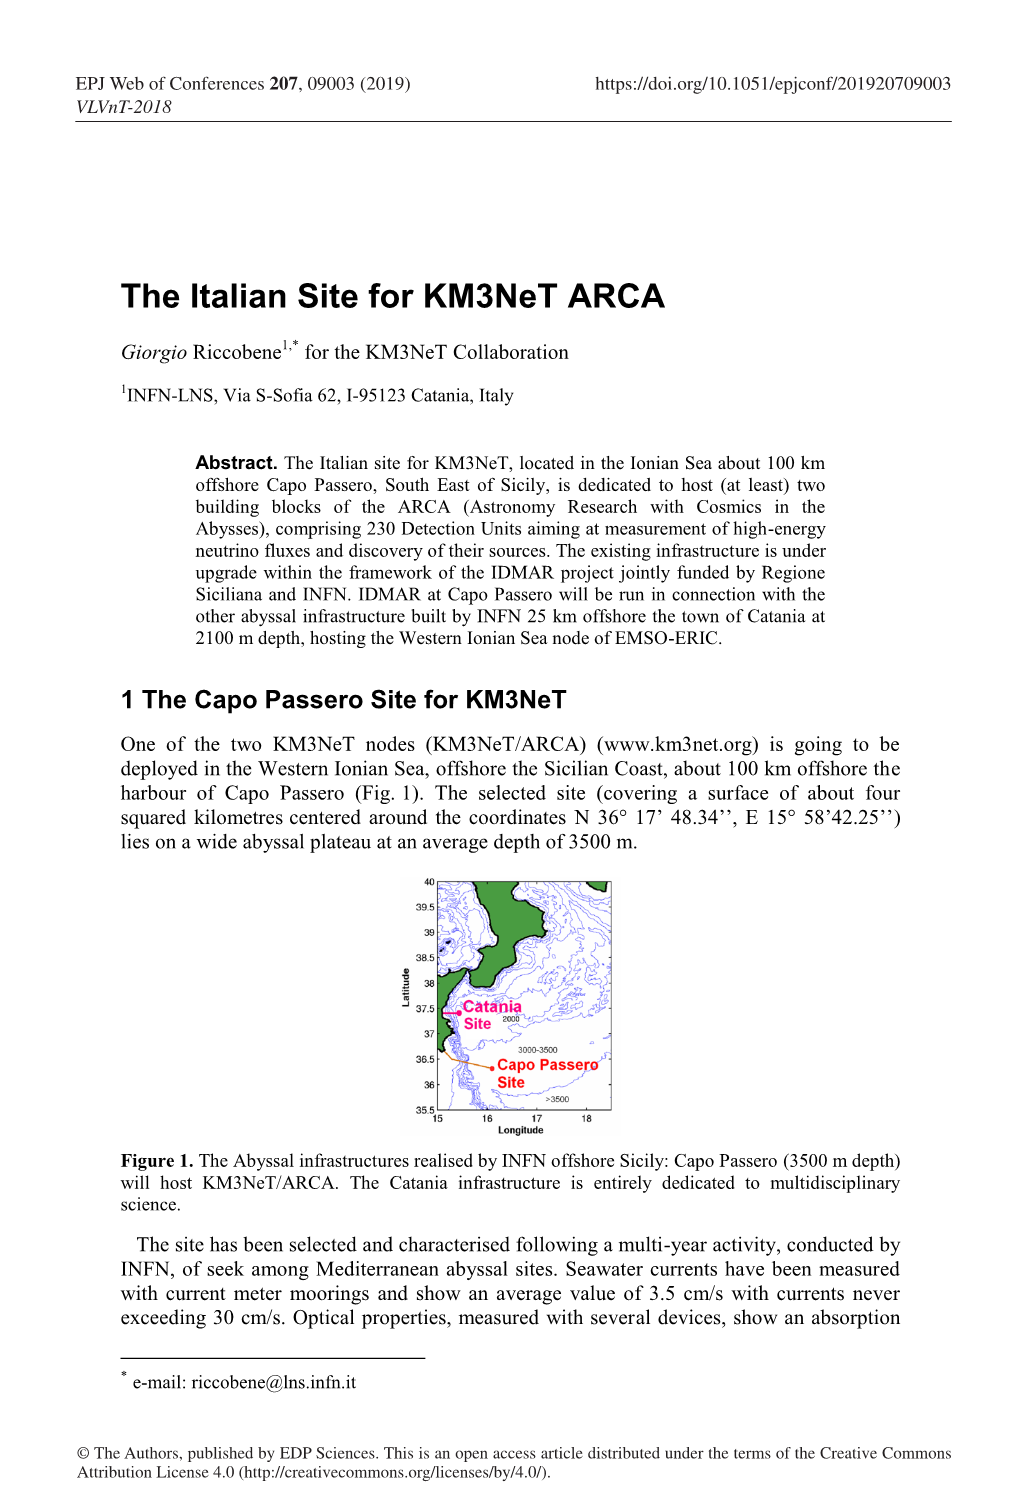 The Italian Site for Km3net ARCA